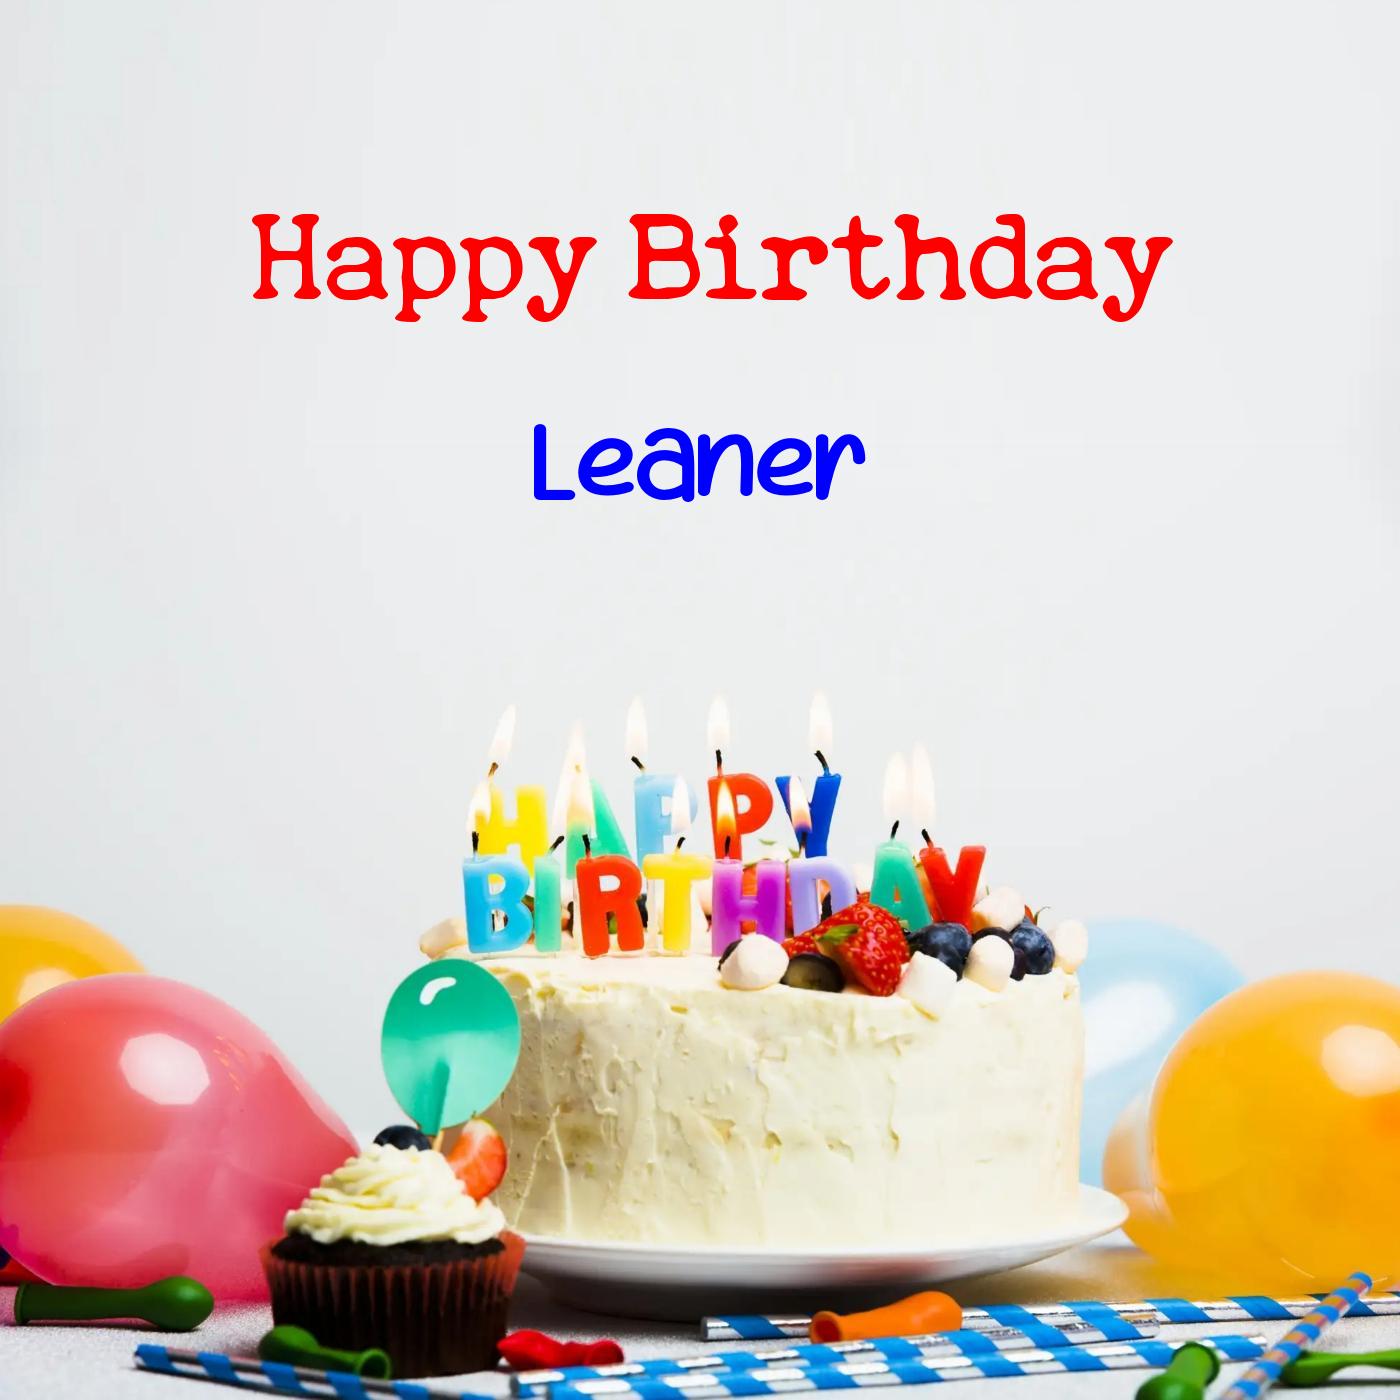 Happy Birthday Leaner Cake Balloons Card